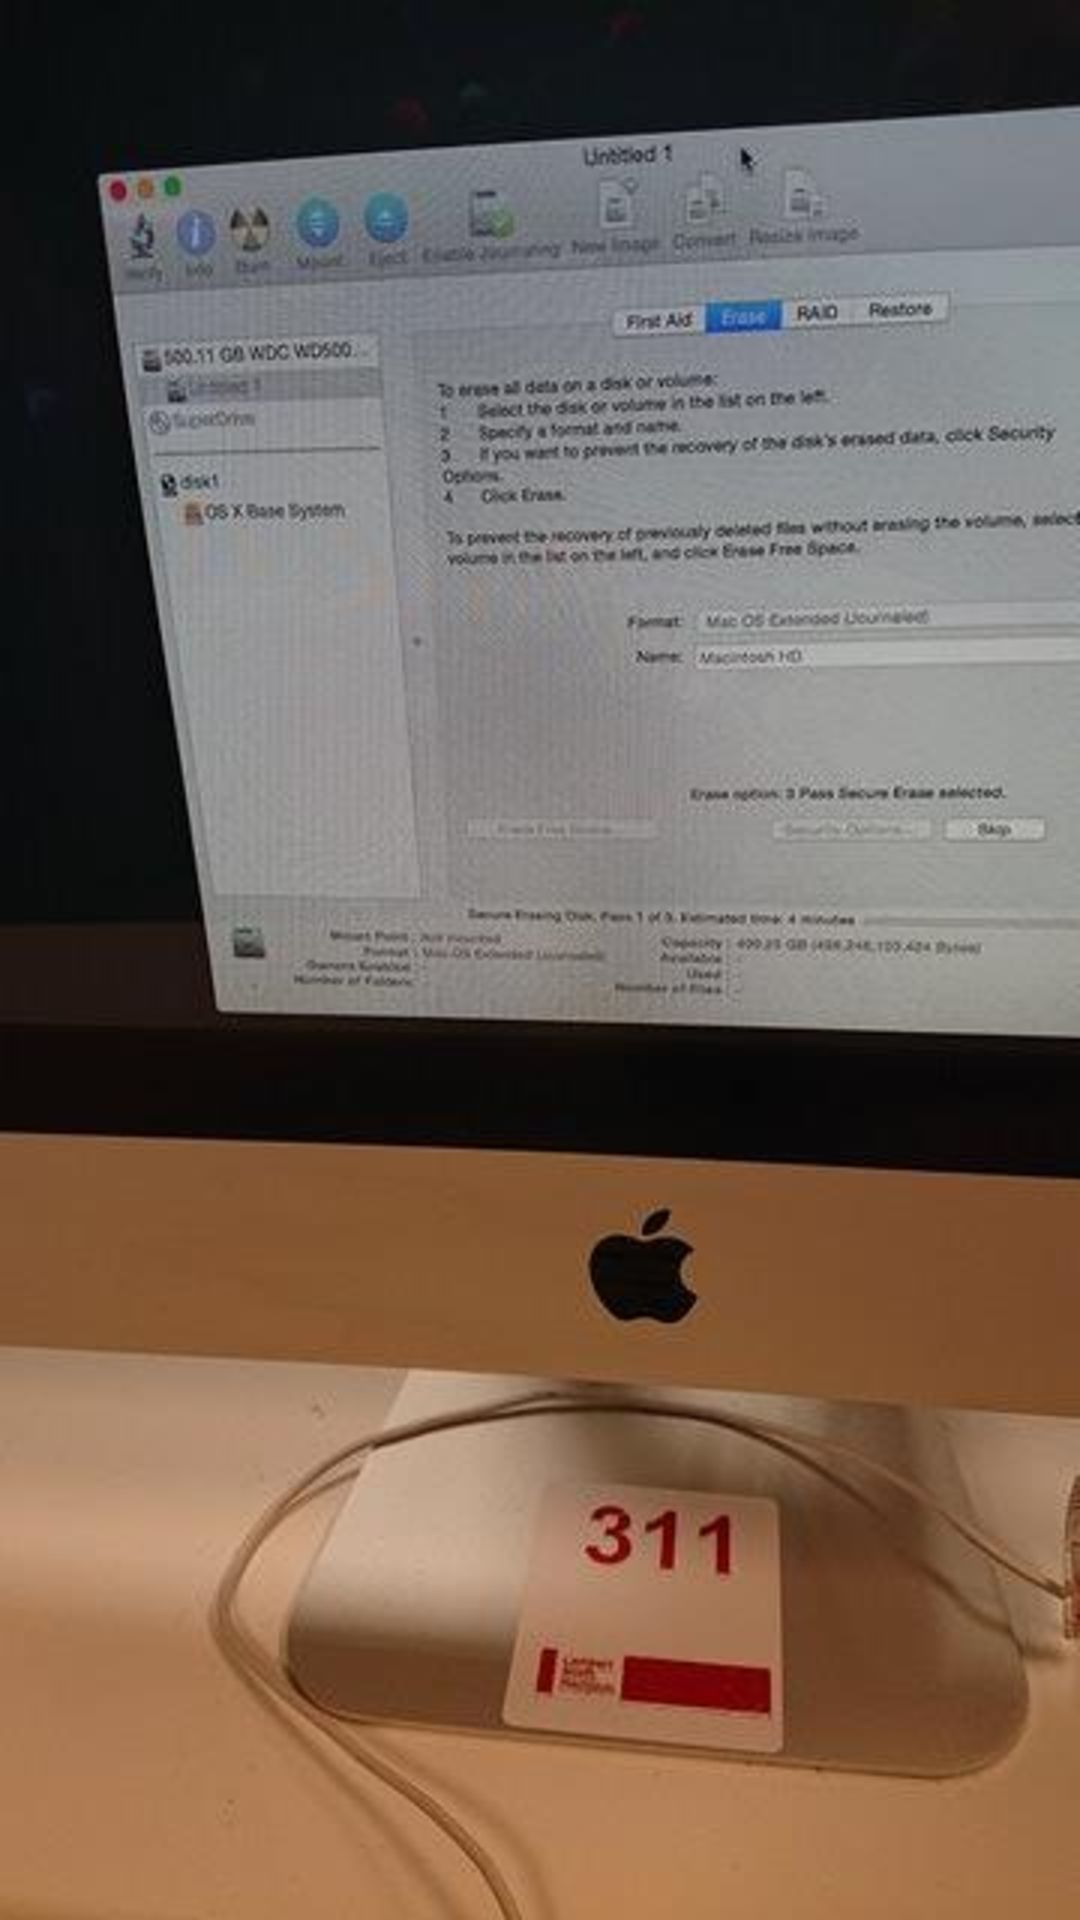 iMac 21.5" (2010) 3.06 GHz Intel Core i3 4Gb RAM 500Gb HD PC serial number W8045KDPDAS - Image 3 of 4